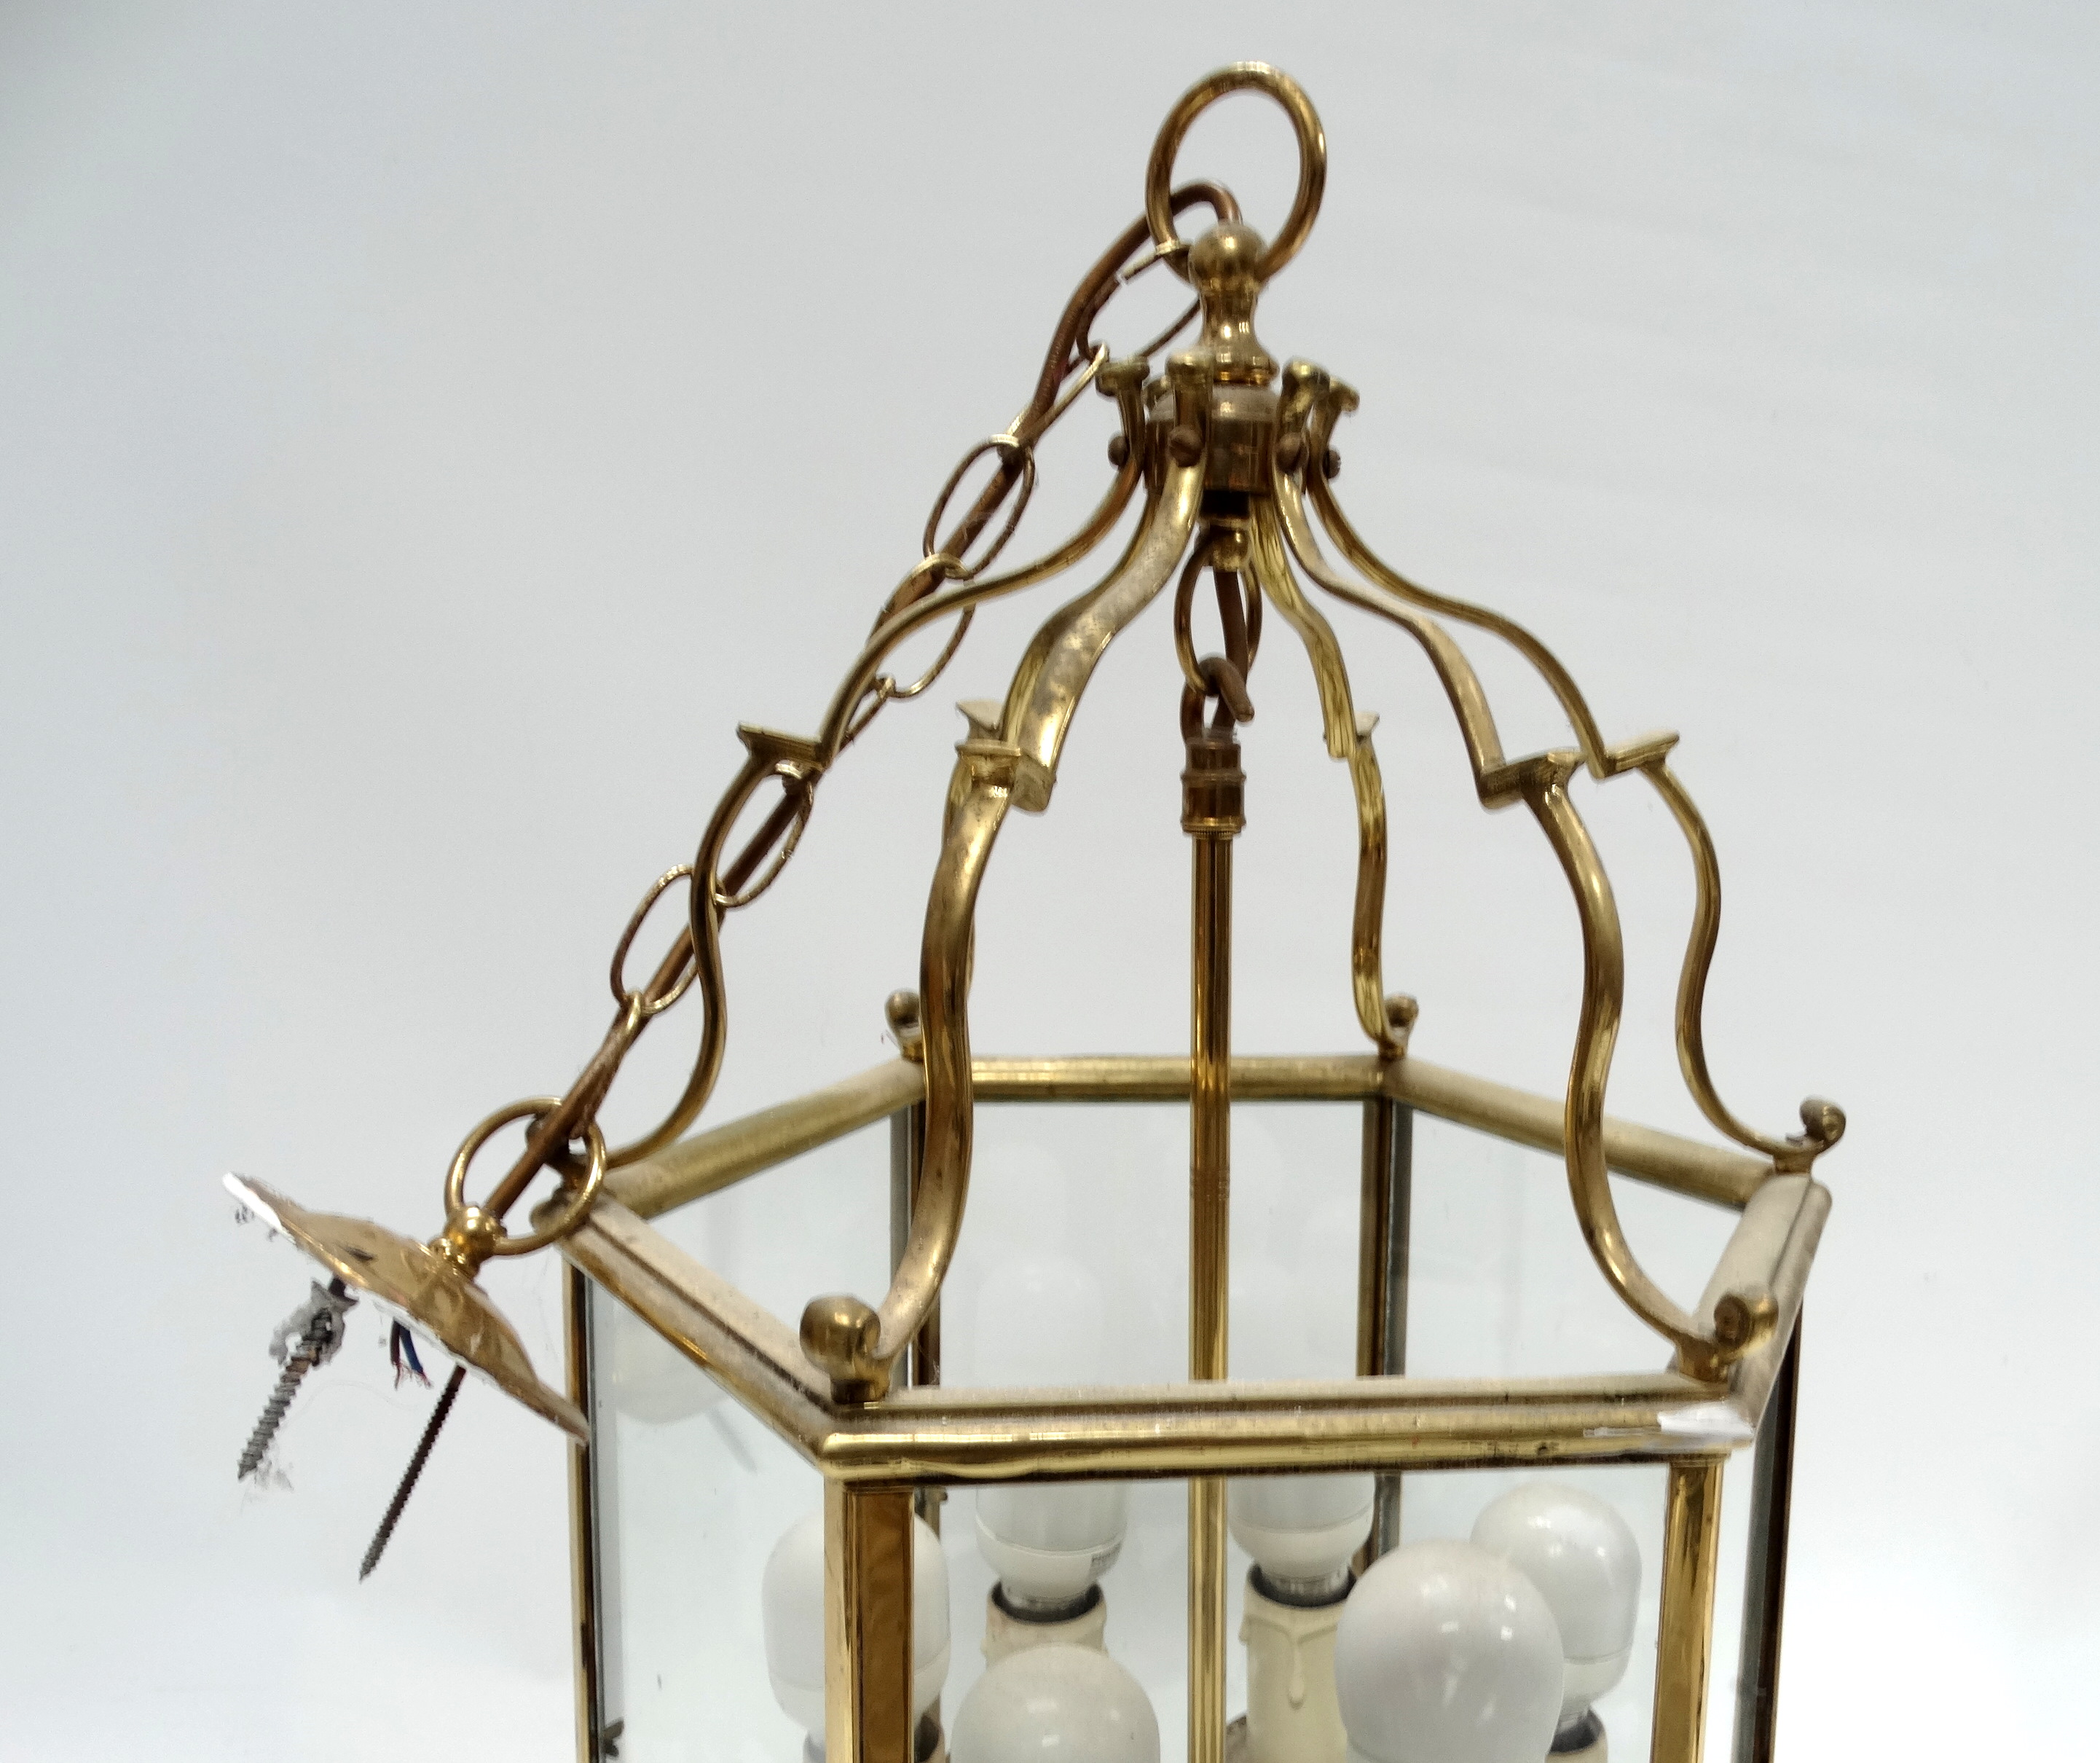 A Georgian style brass hexagonal hall lantern - height 59cm. - Image 3 of 3